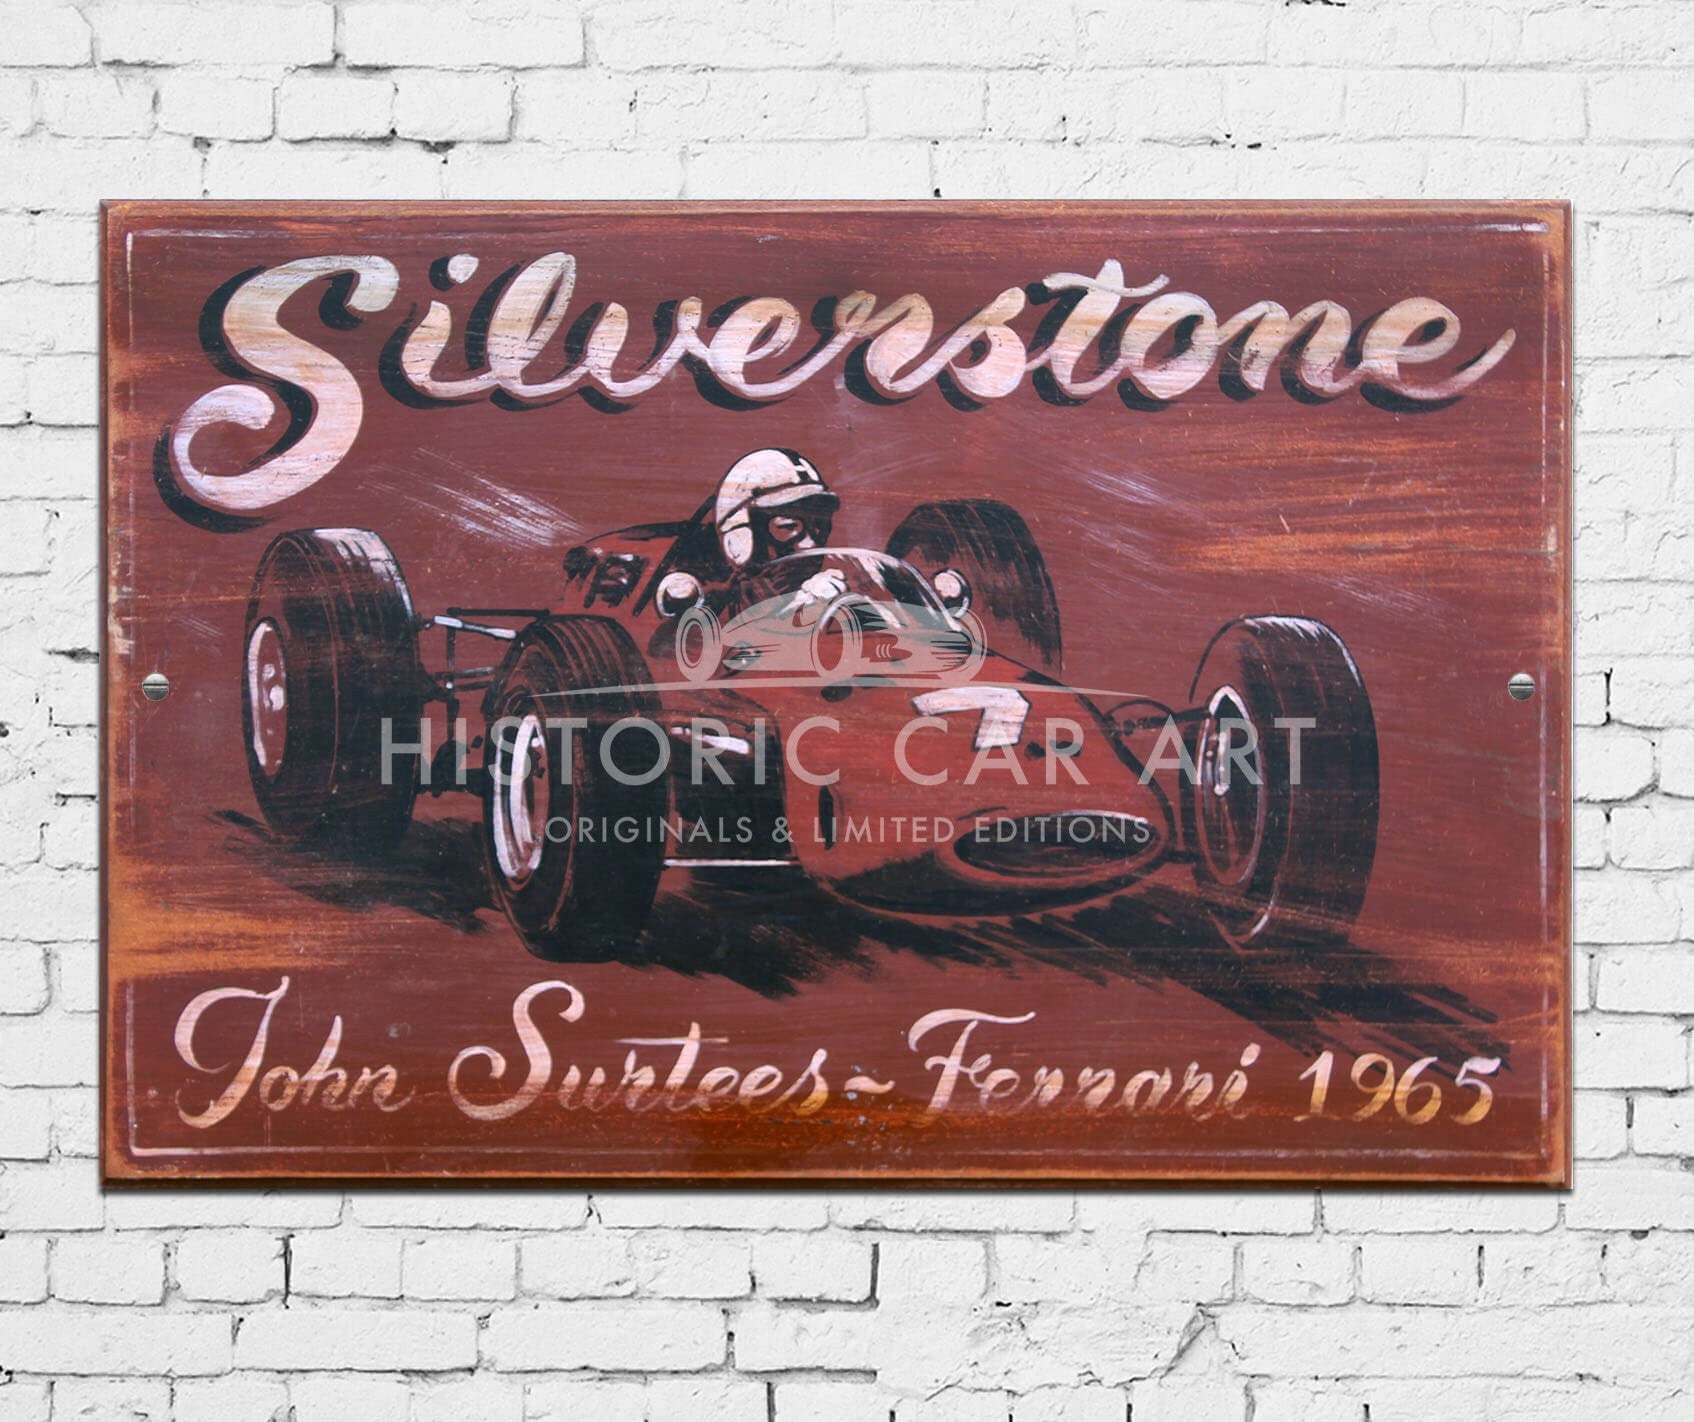 Silverstone 1965 | Ferrari | Surtees | Wooden Sign